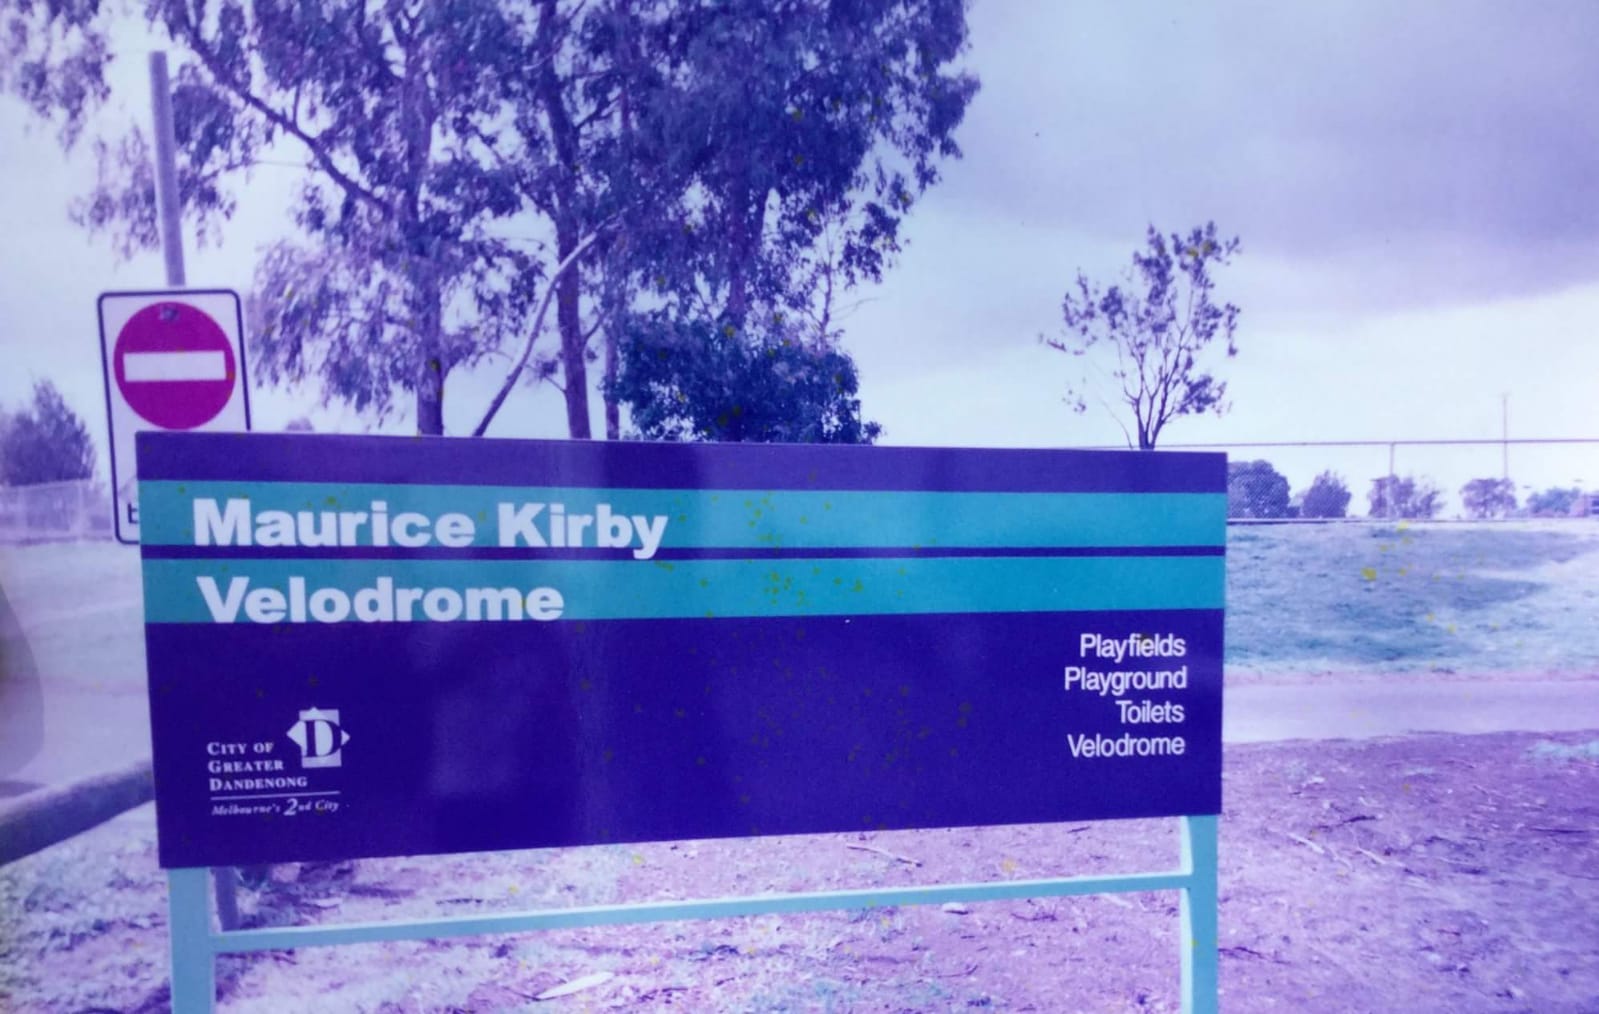 Maurice Kirby Velodrome wayfinding circa 2002, image credit: Gayle George